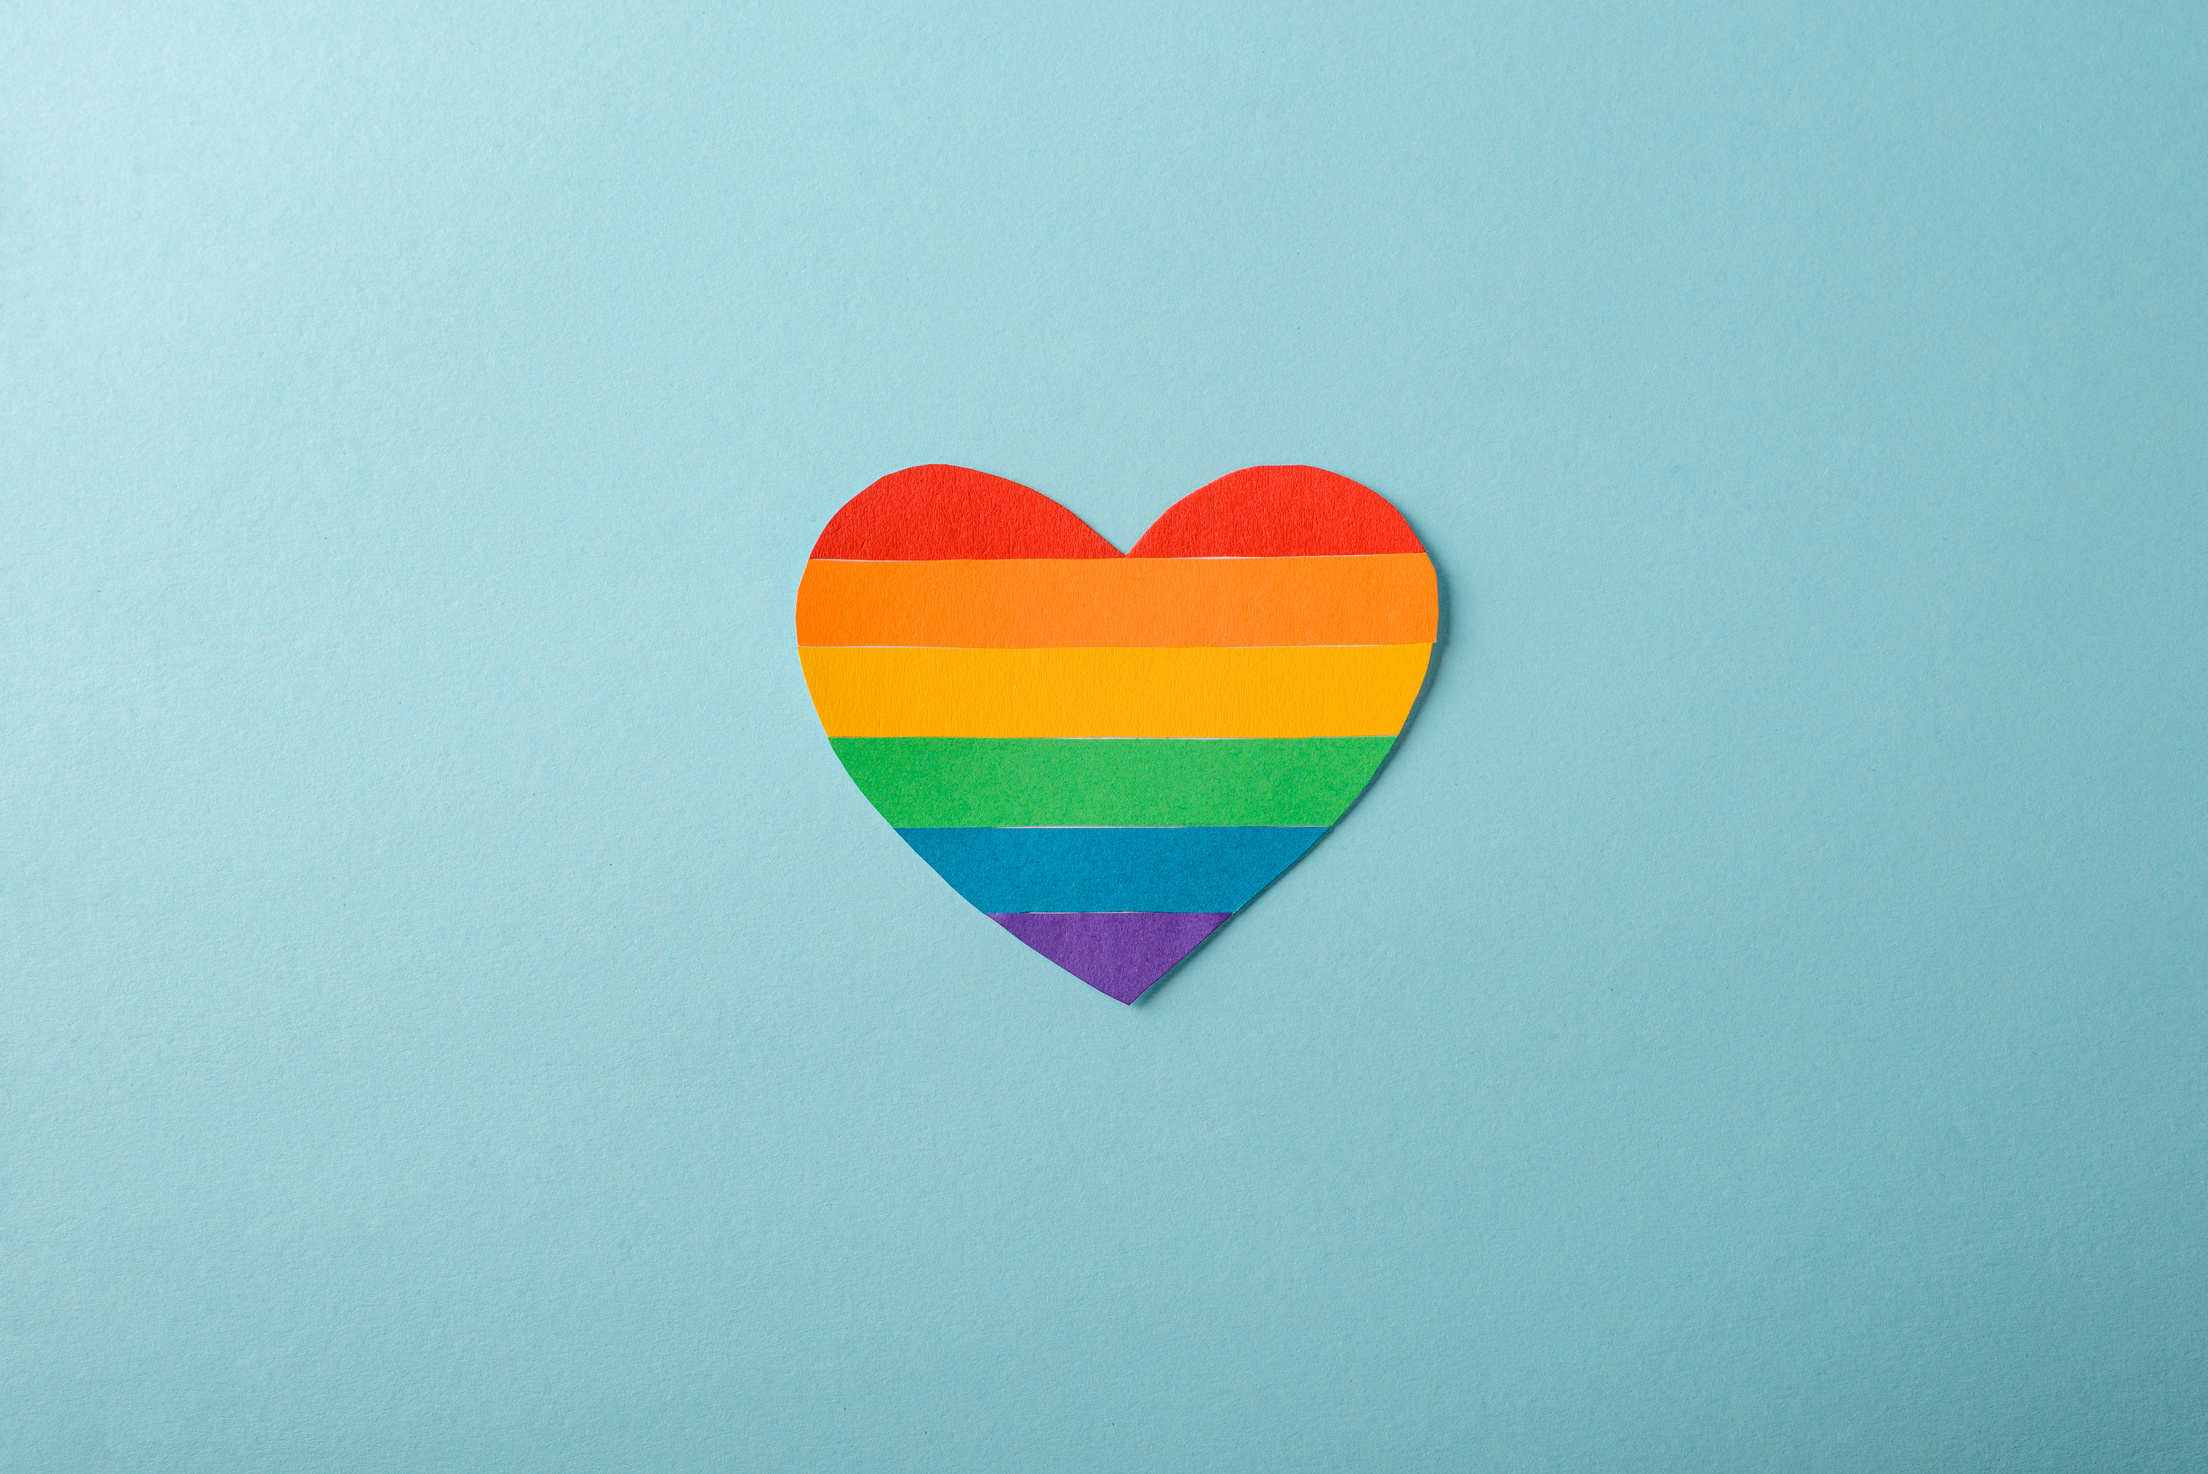 Rainbow heart on blue. LGBT flag, gay pride concept